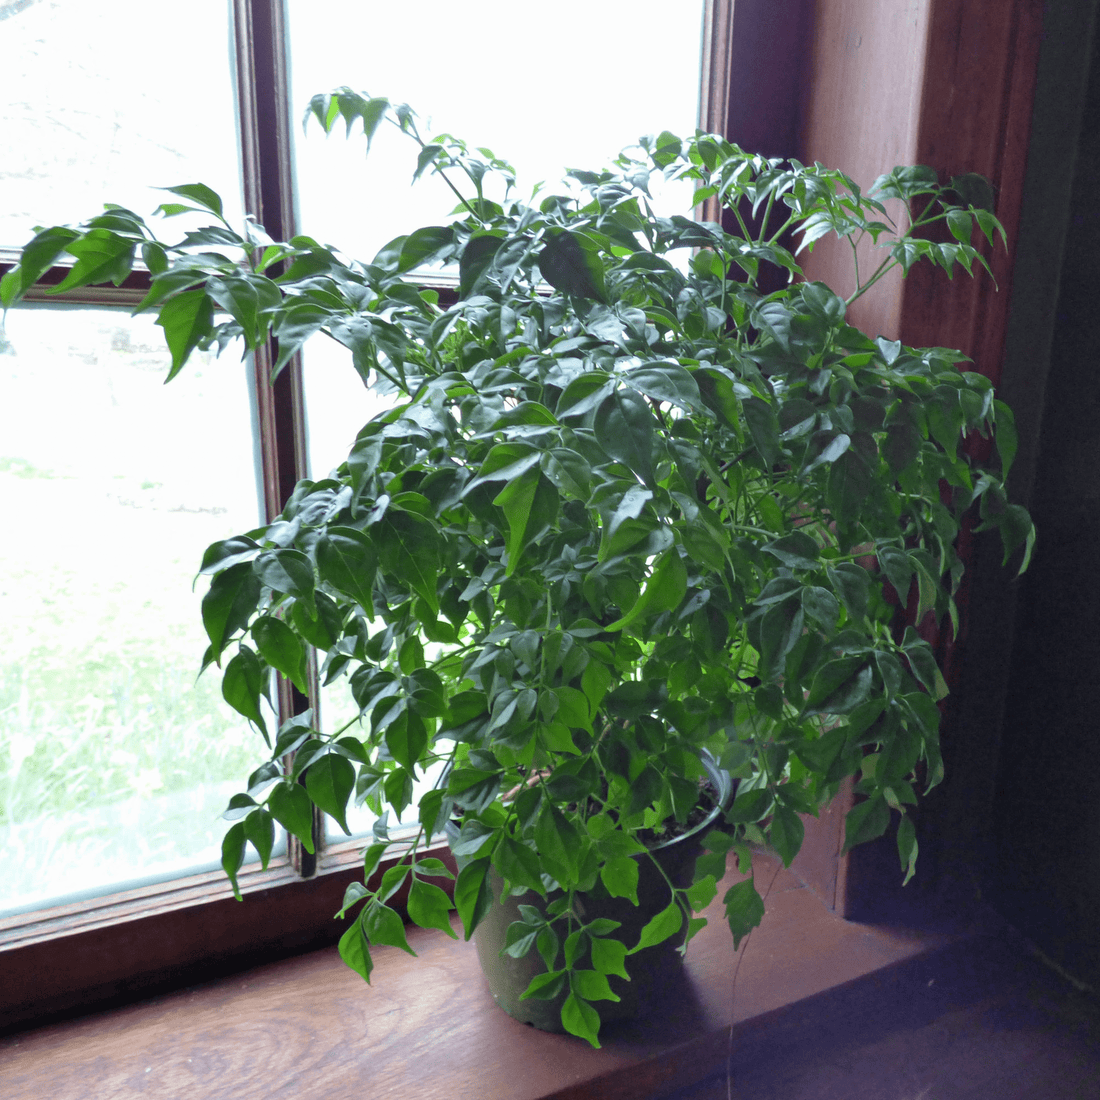 China Doll (Radermachera sinica) Indoor / Outdoor Live Plant